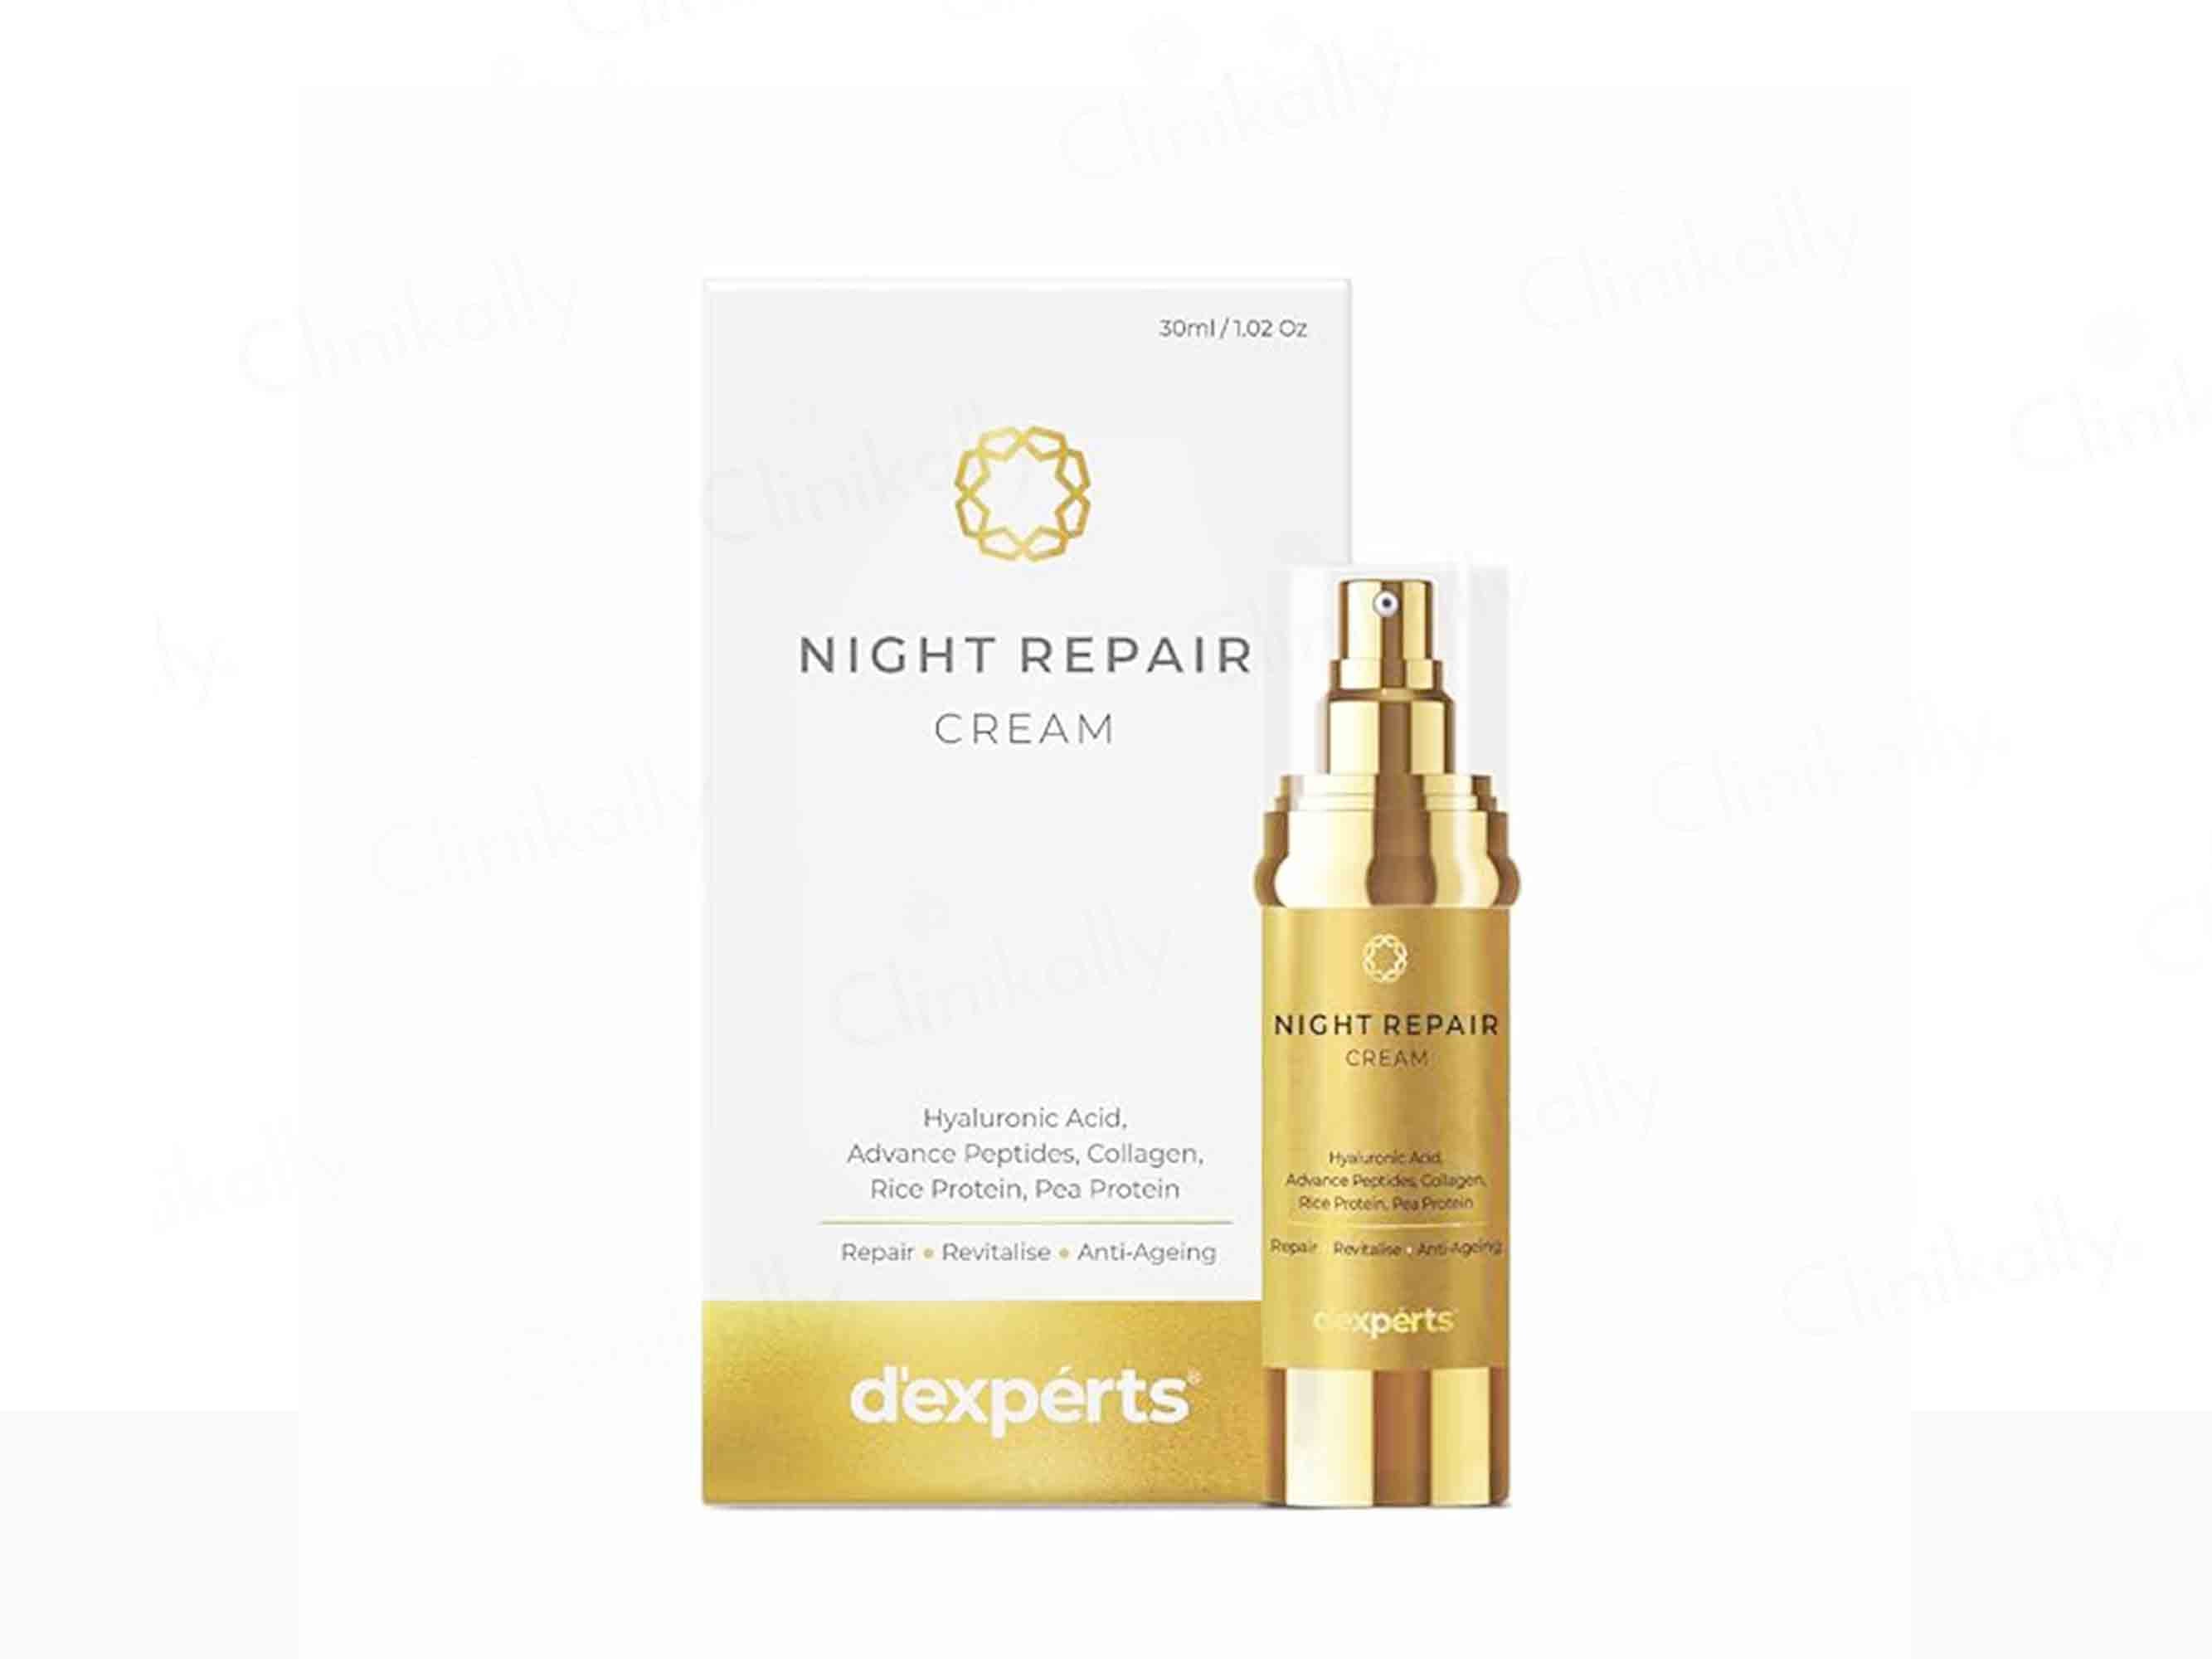 Brinton D'experts Night Repair Cream - Clinikally